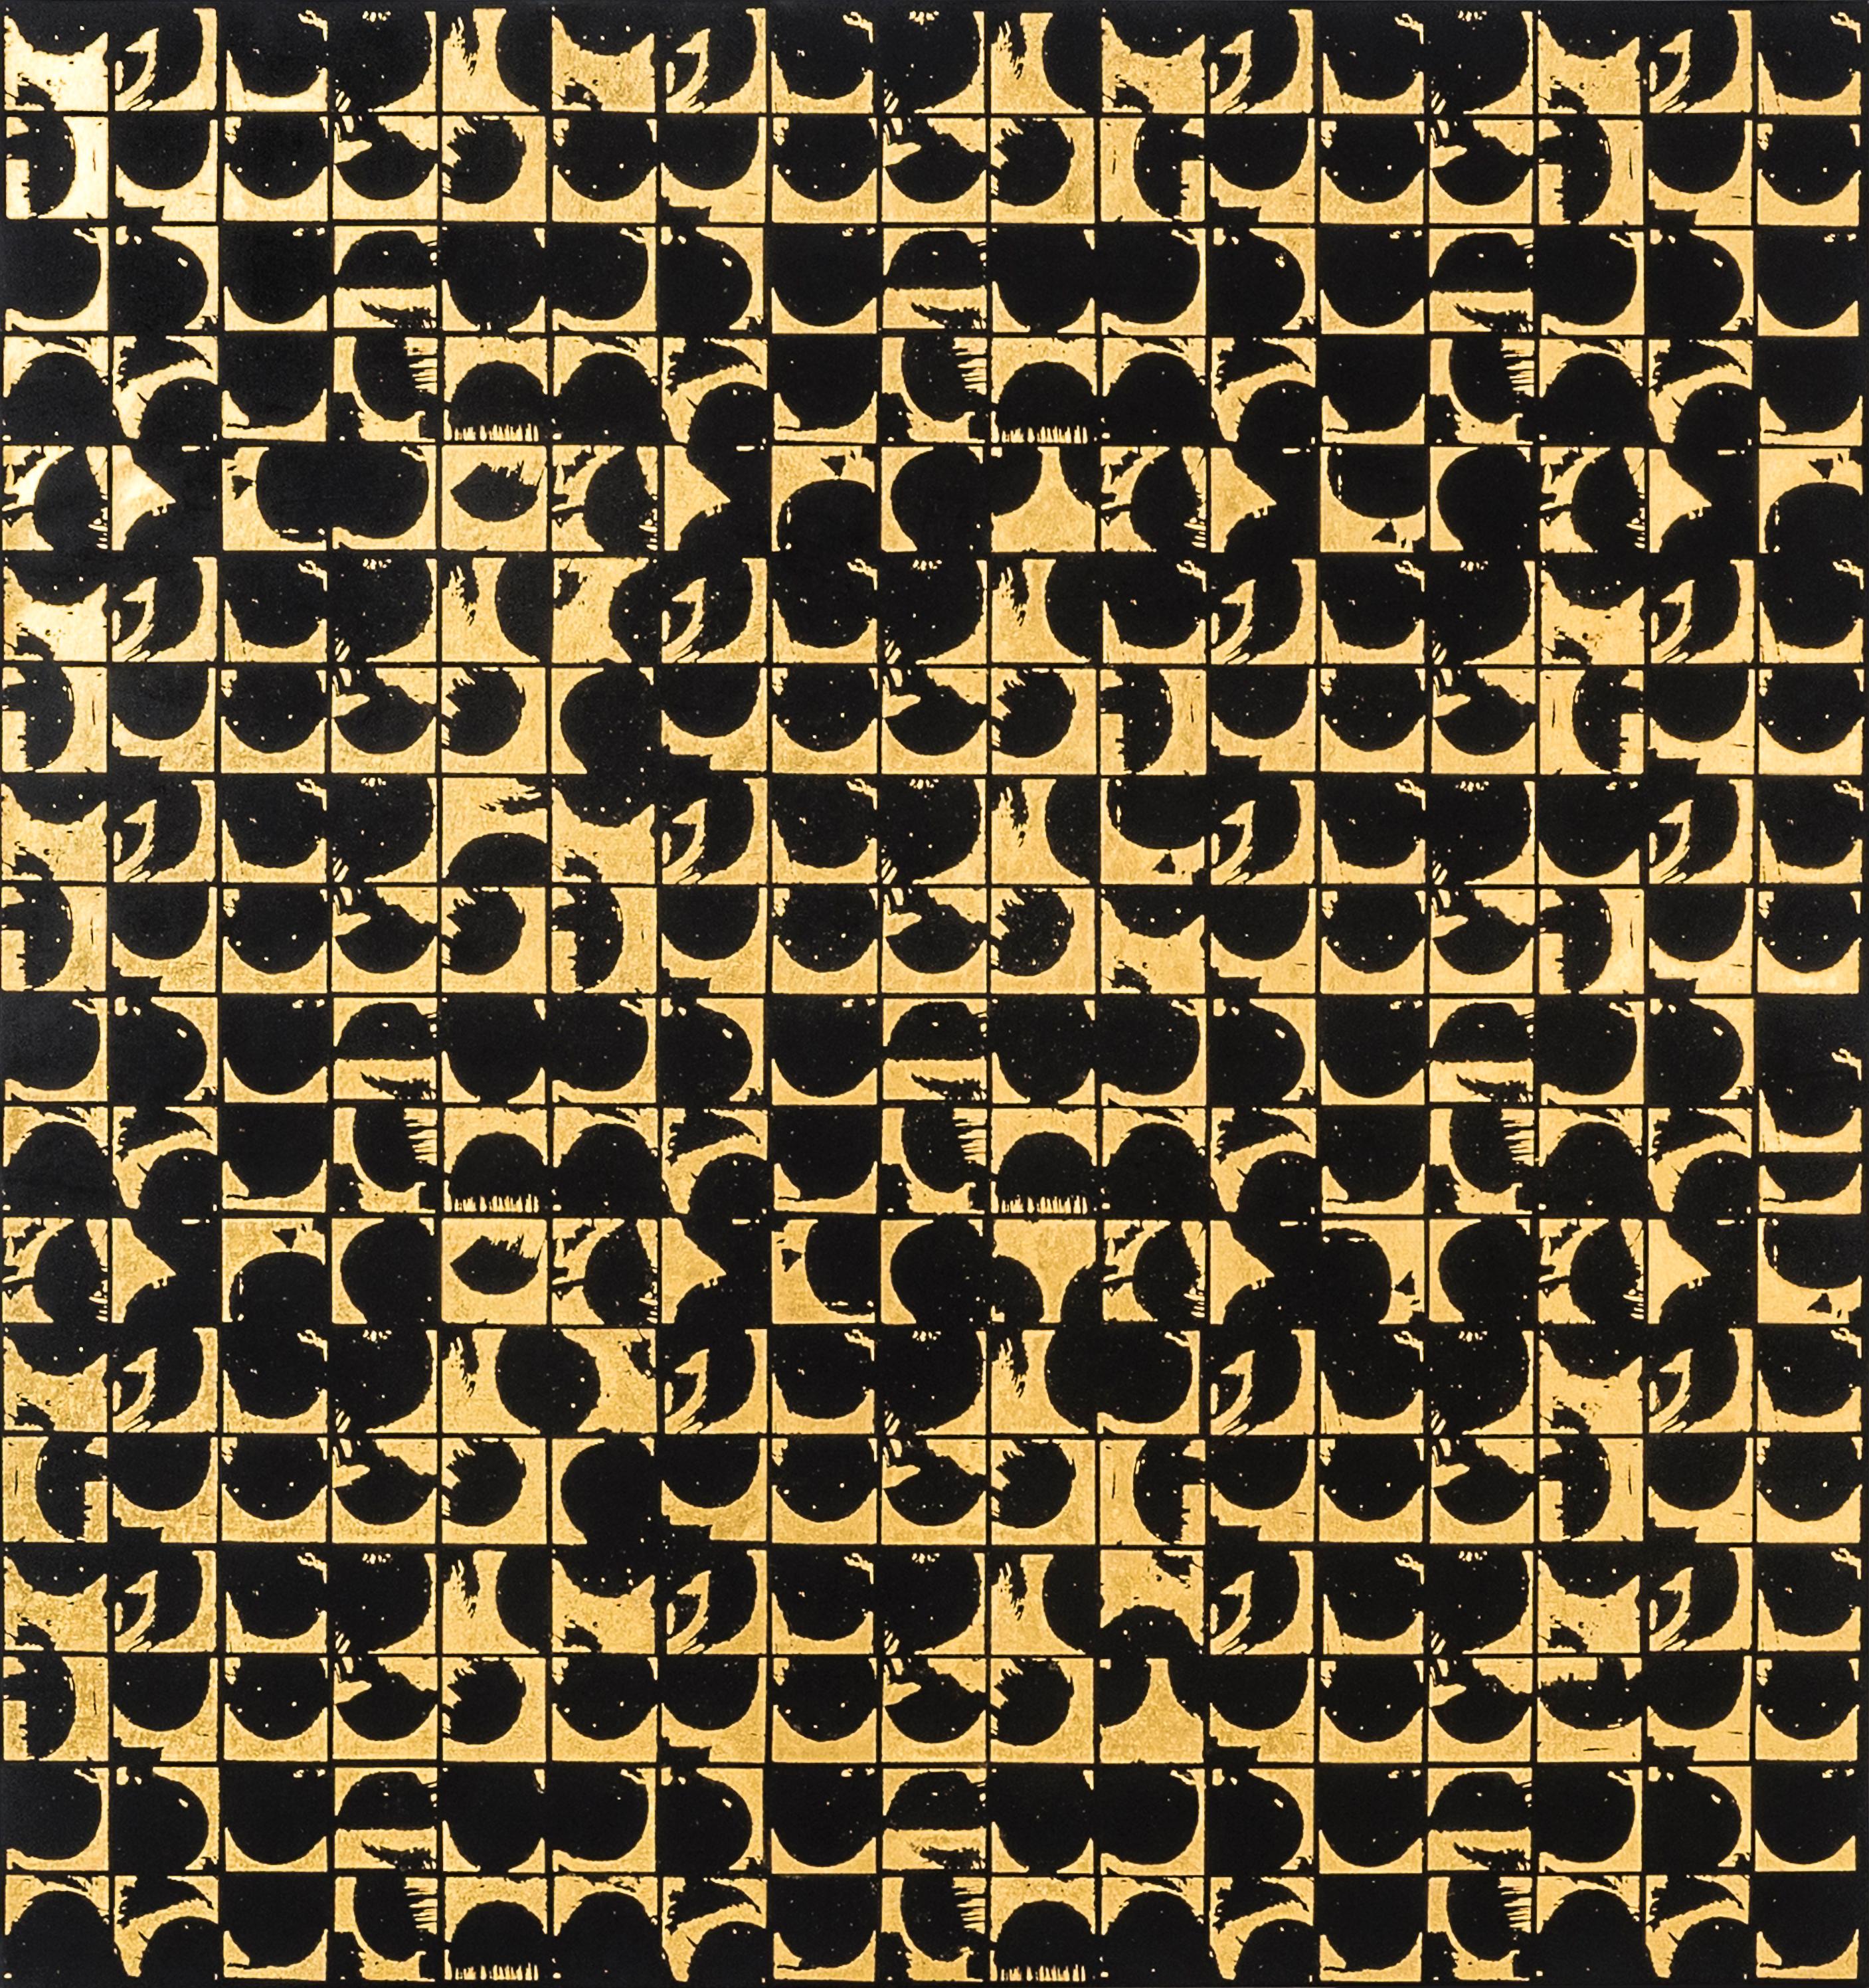 ROUNDS POSITIVE CANVAS I (design gold black metallic work on canvas patterns) 